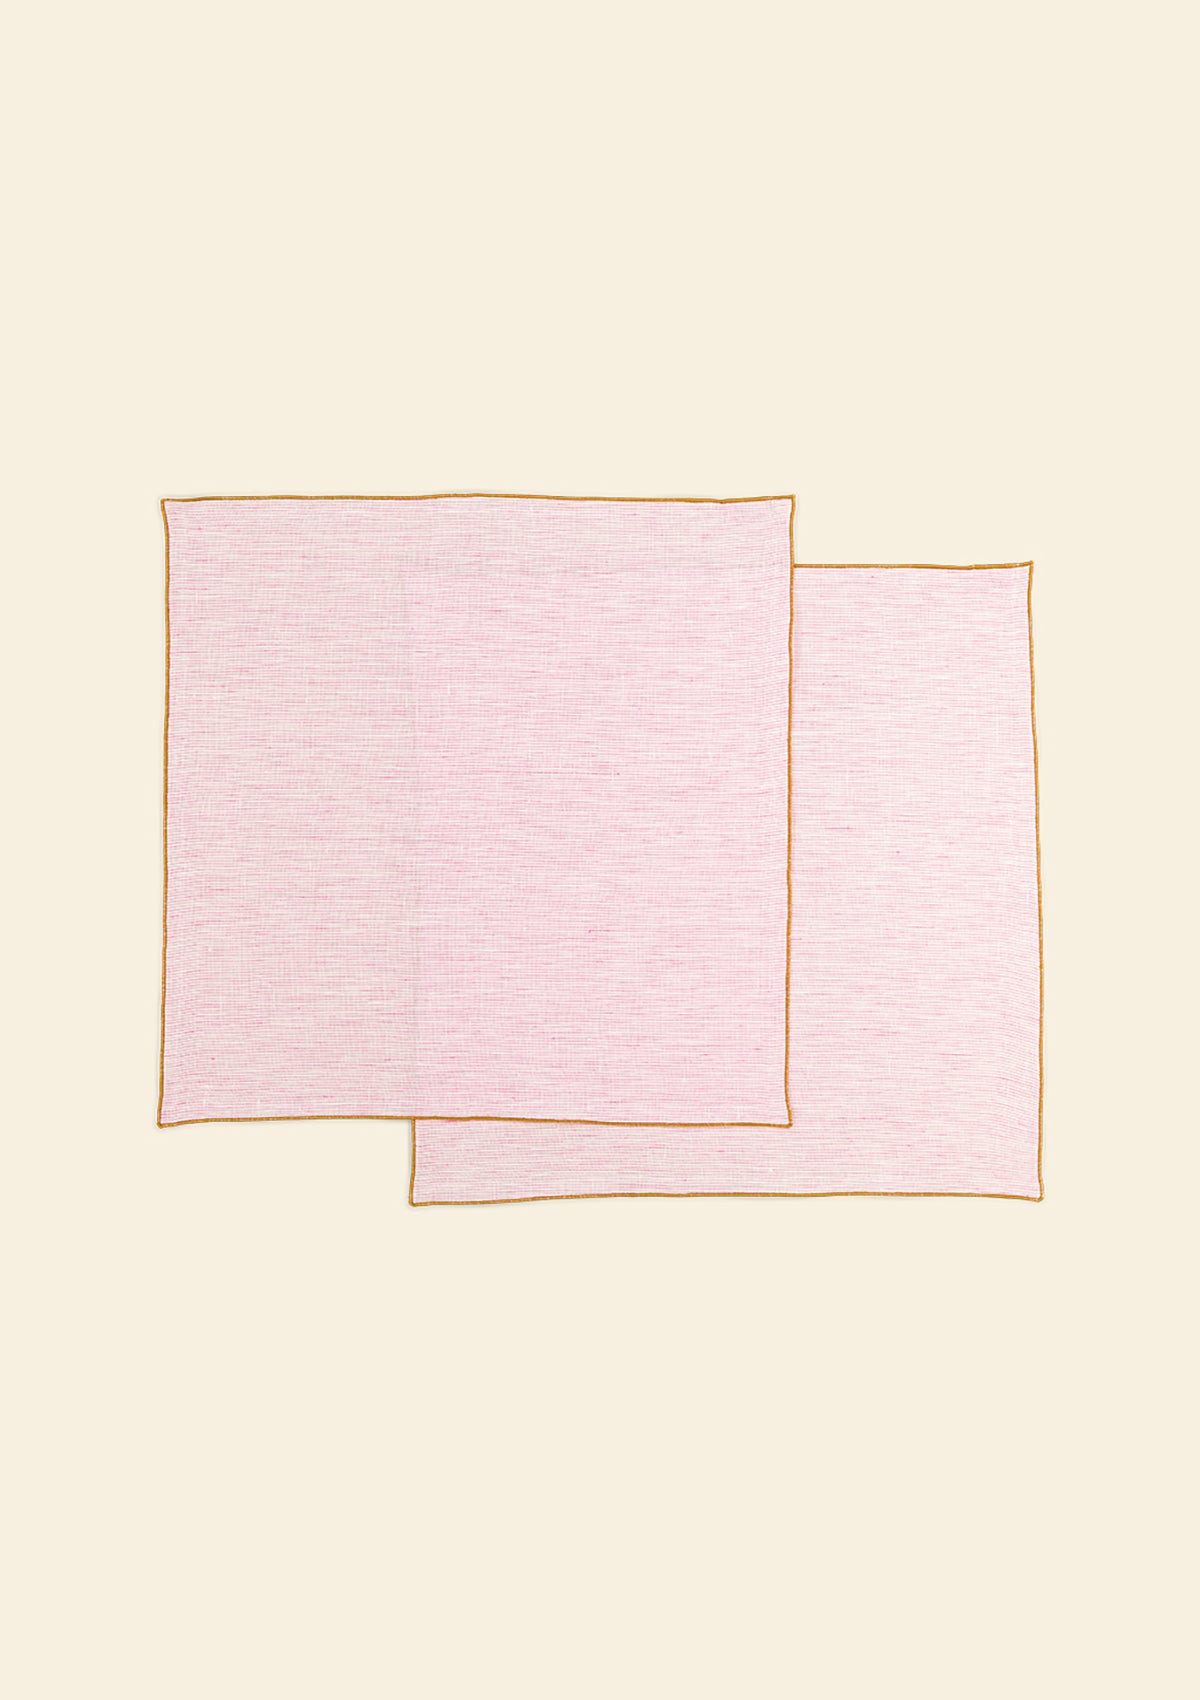 Linen napkins (set of 2) pink & white stripes